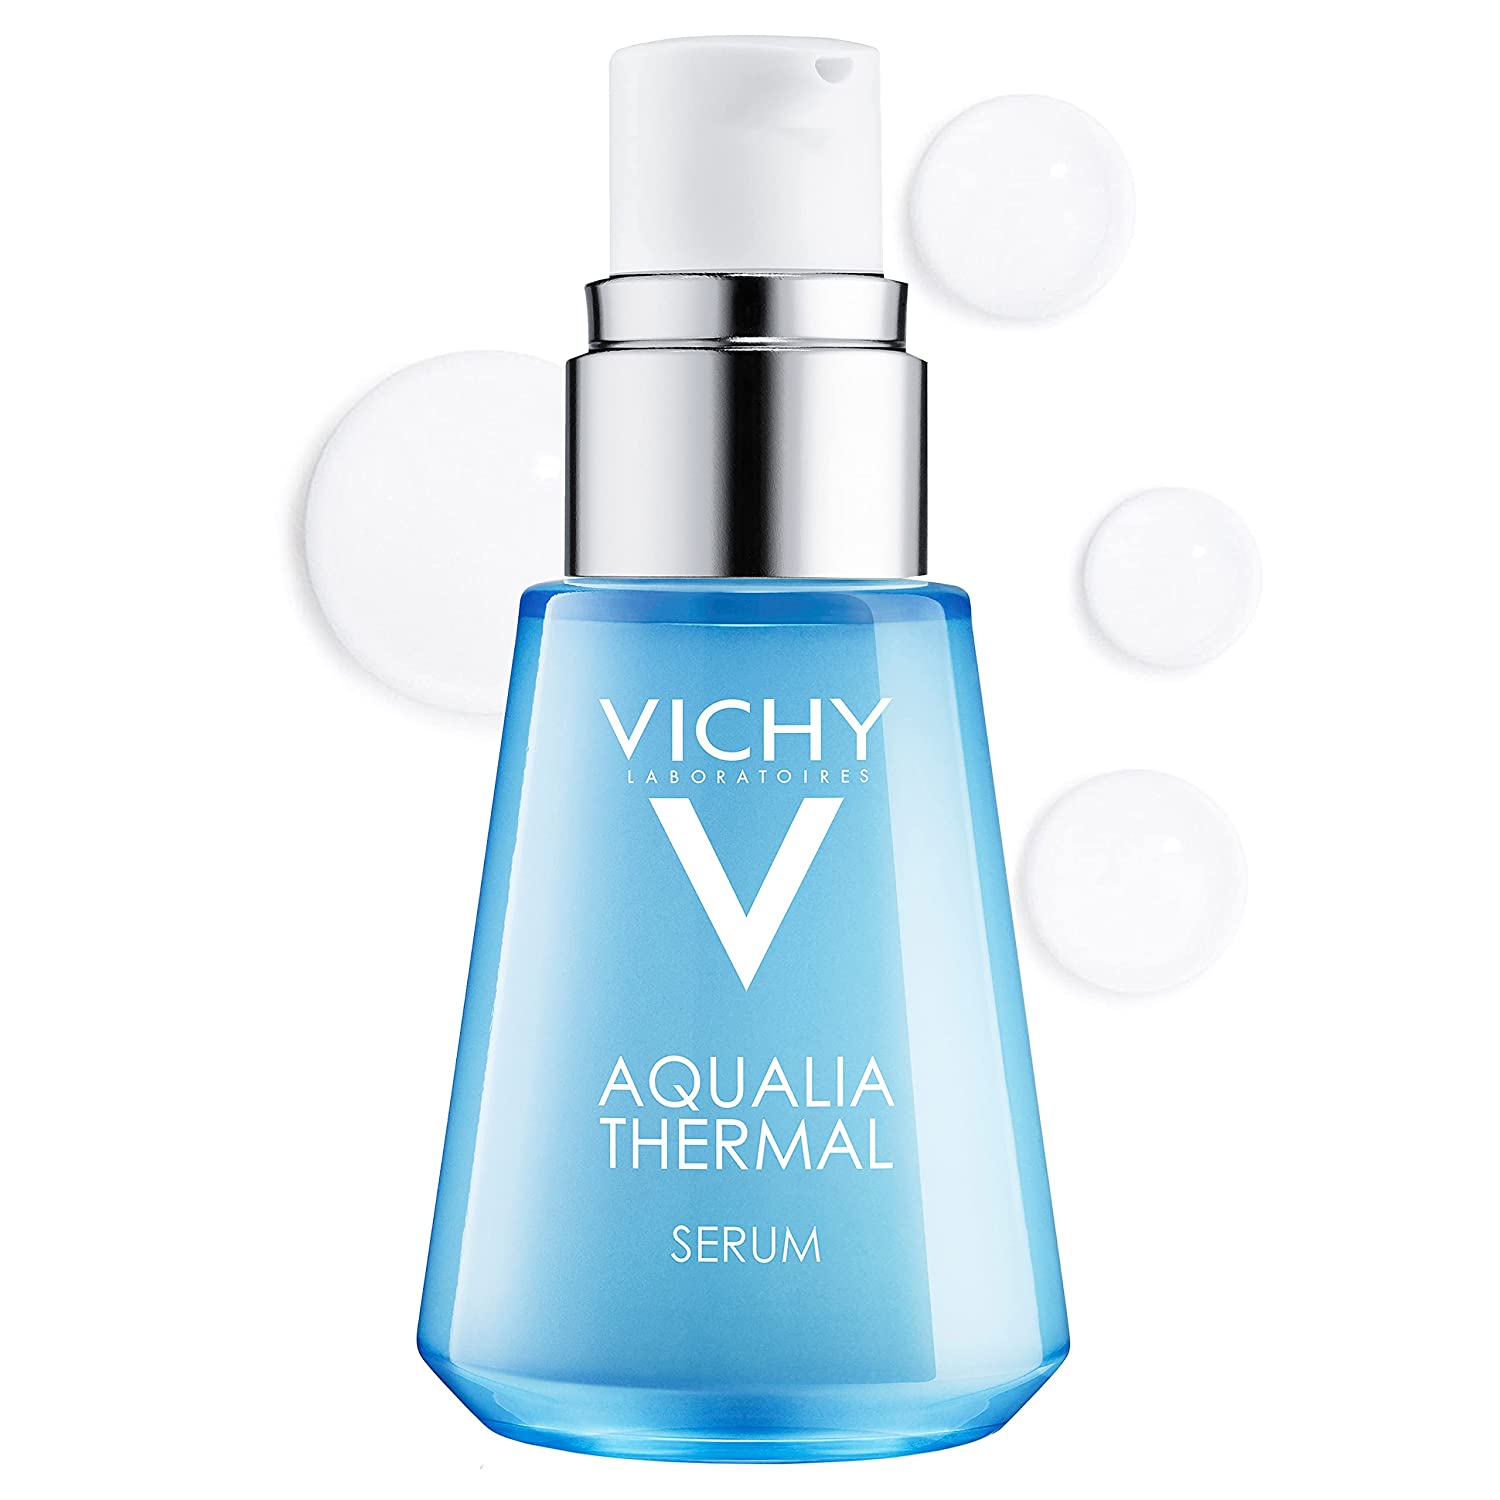 VICHY On-Site Facial Treatment (1 x 30 ml)